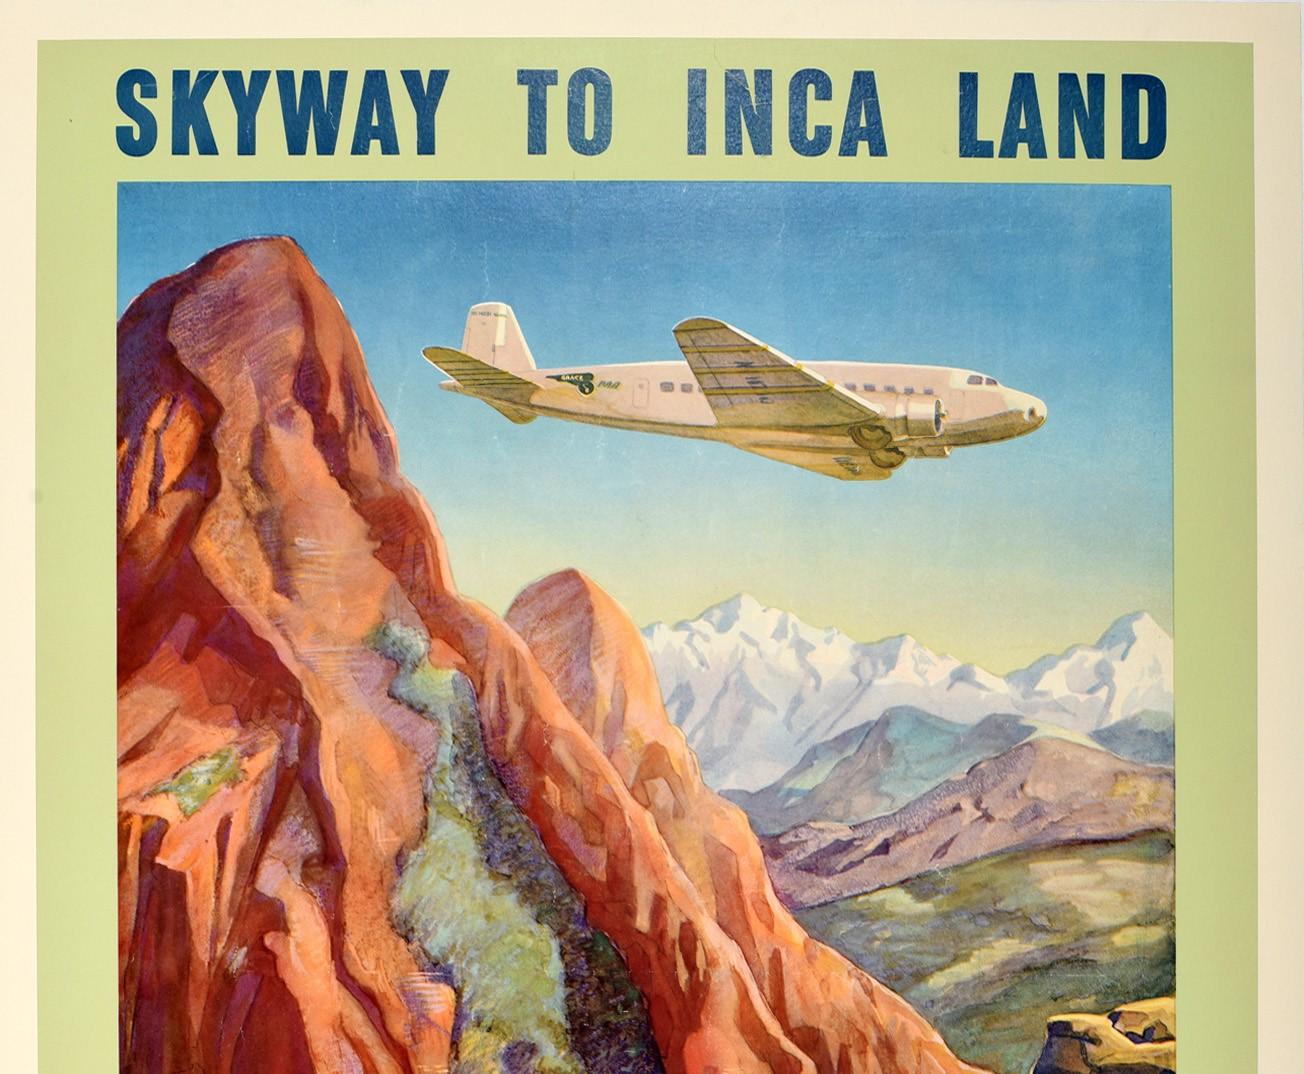 Original Vintage Air Travel Poster Skyway To Inca Land Pan Am Macchu Picchu Peru - Print by Paul George Lawler